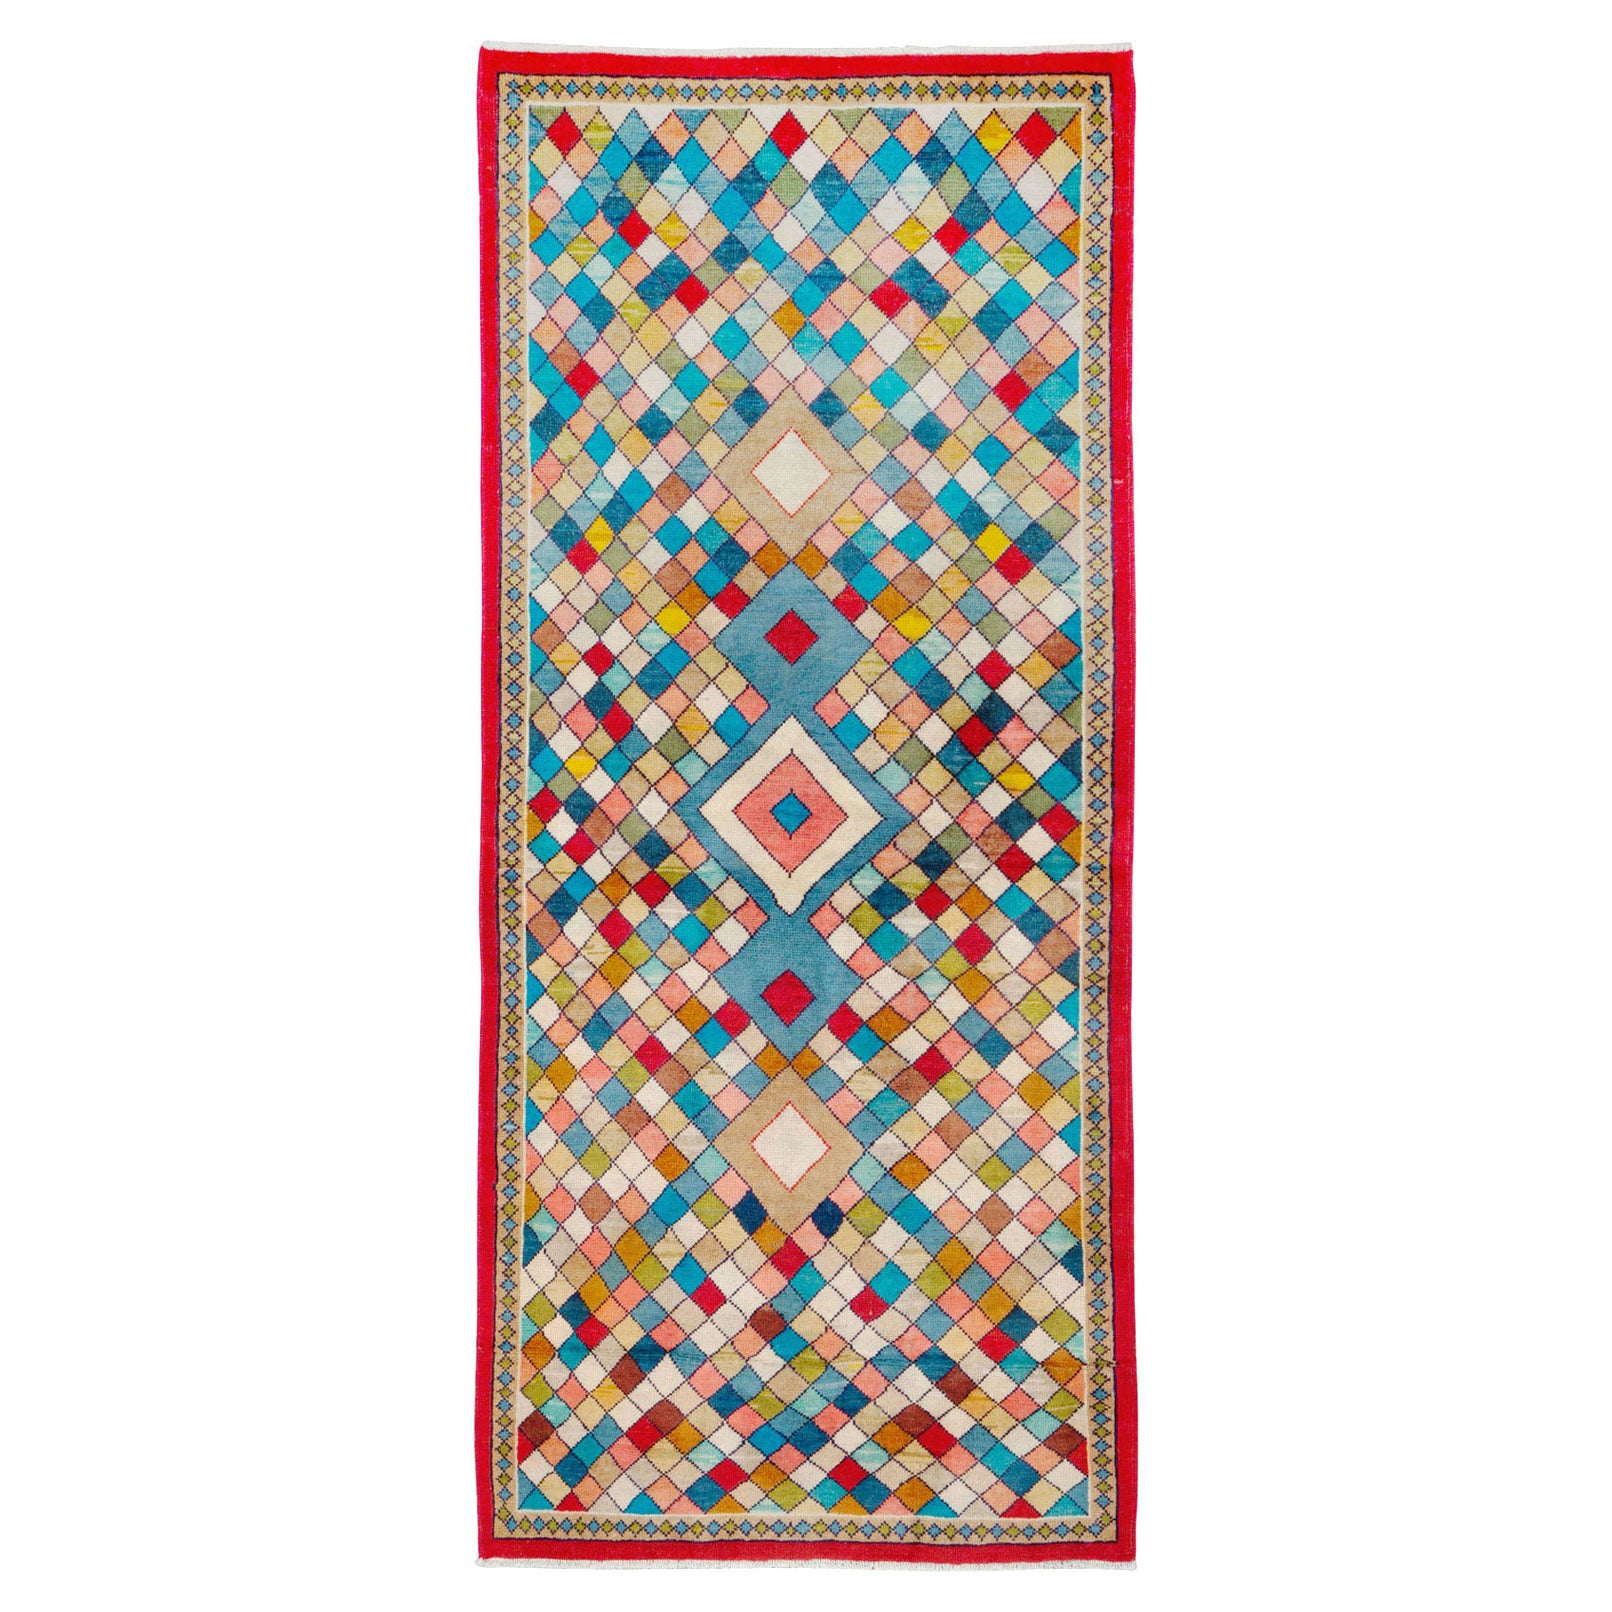 Mid-20th Century Handmade Persian Art Deco Style Mahal Throw Rug For Sale